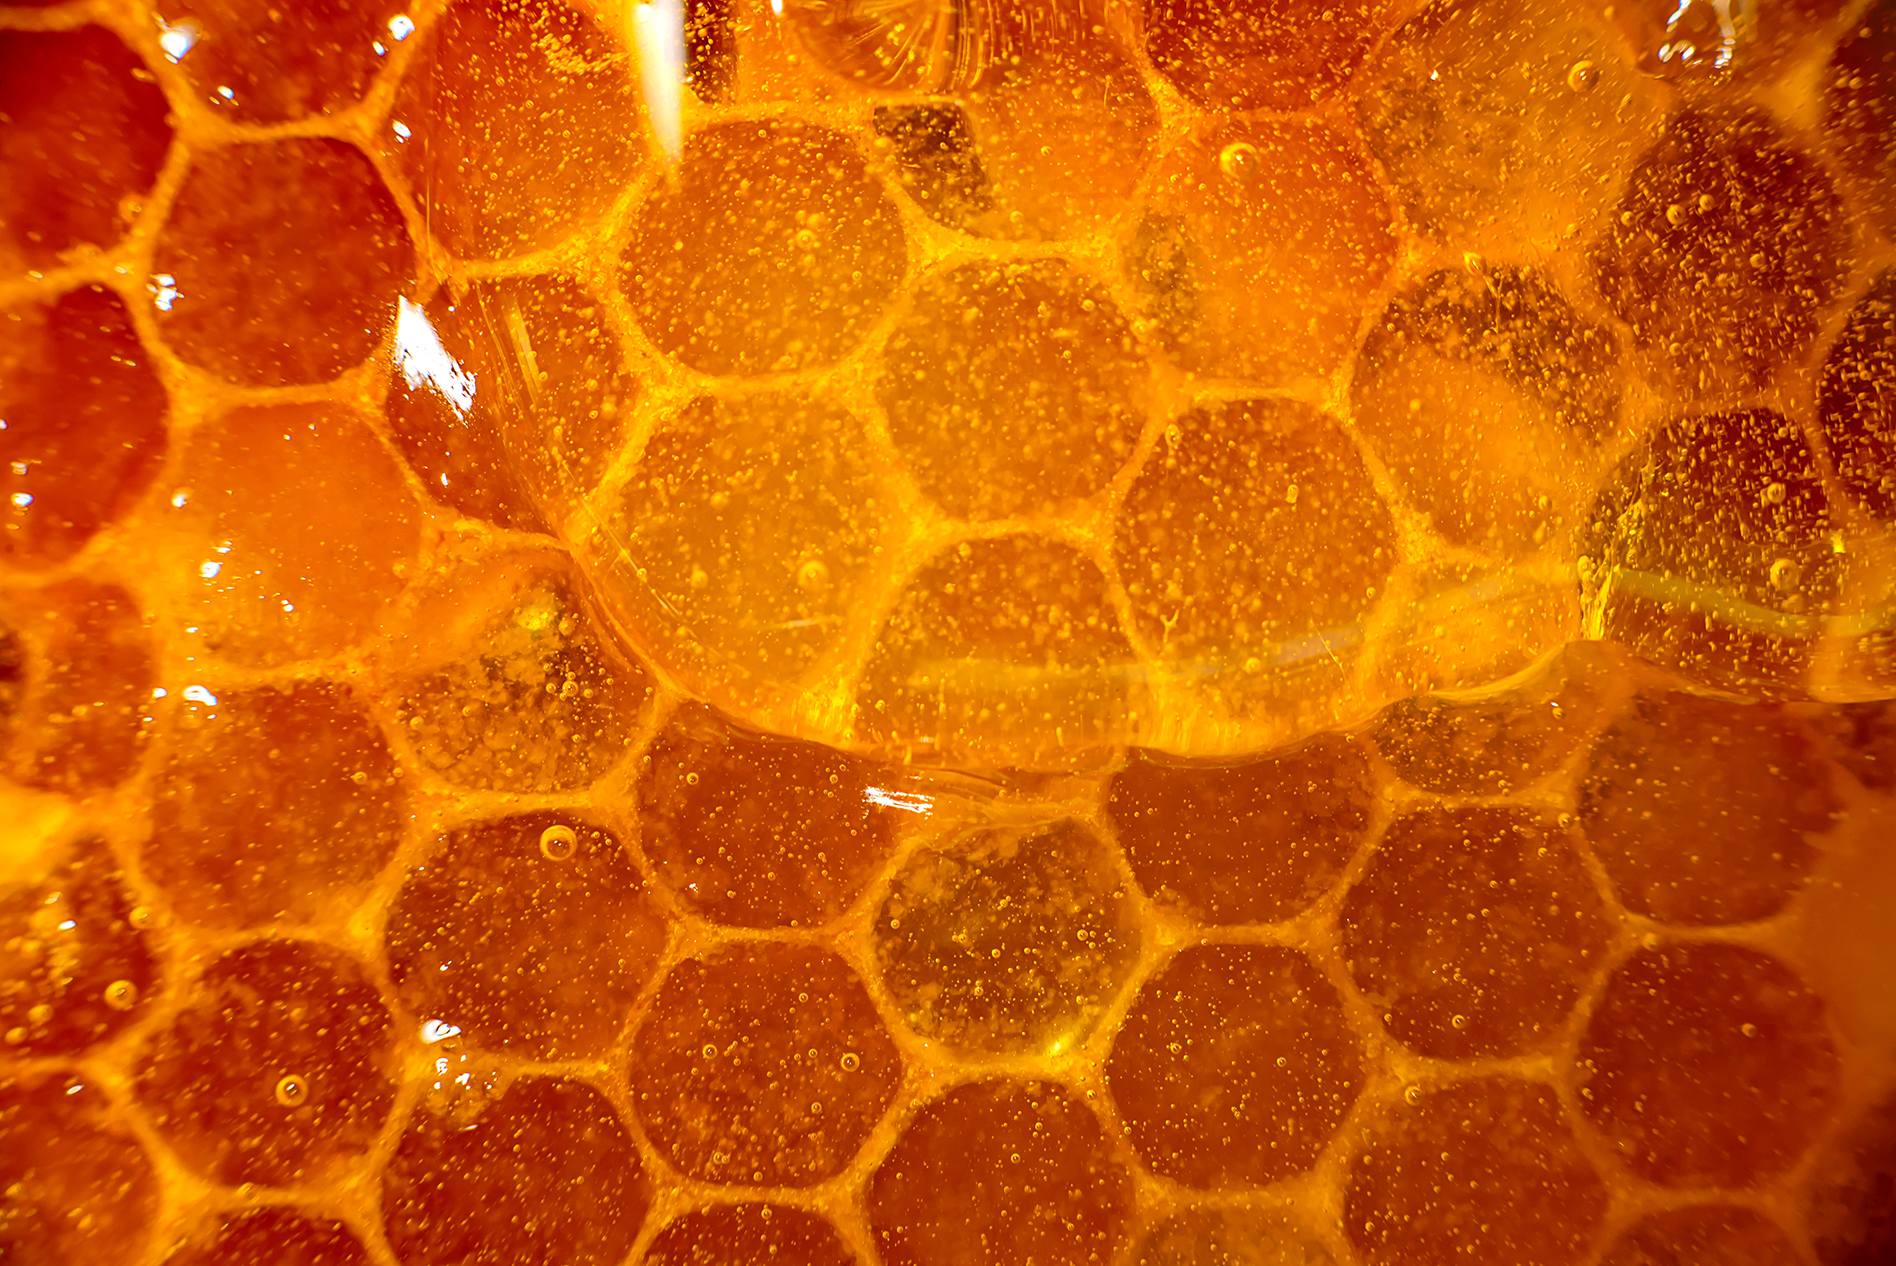 The amplifying spiritual power of raw honey